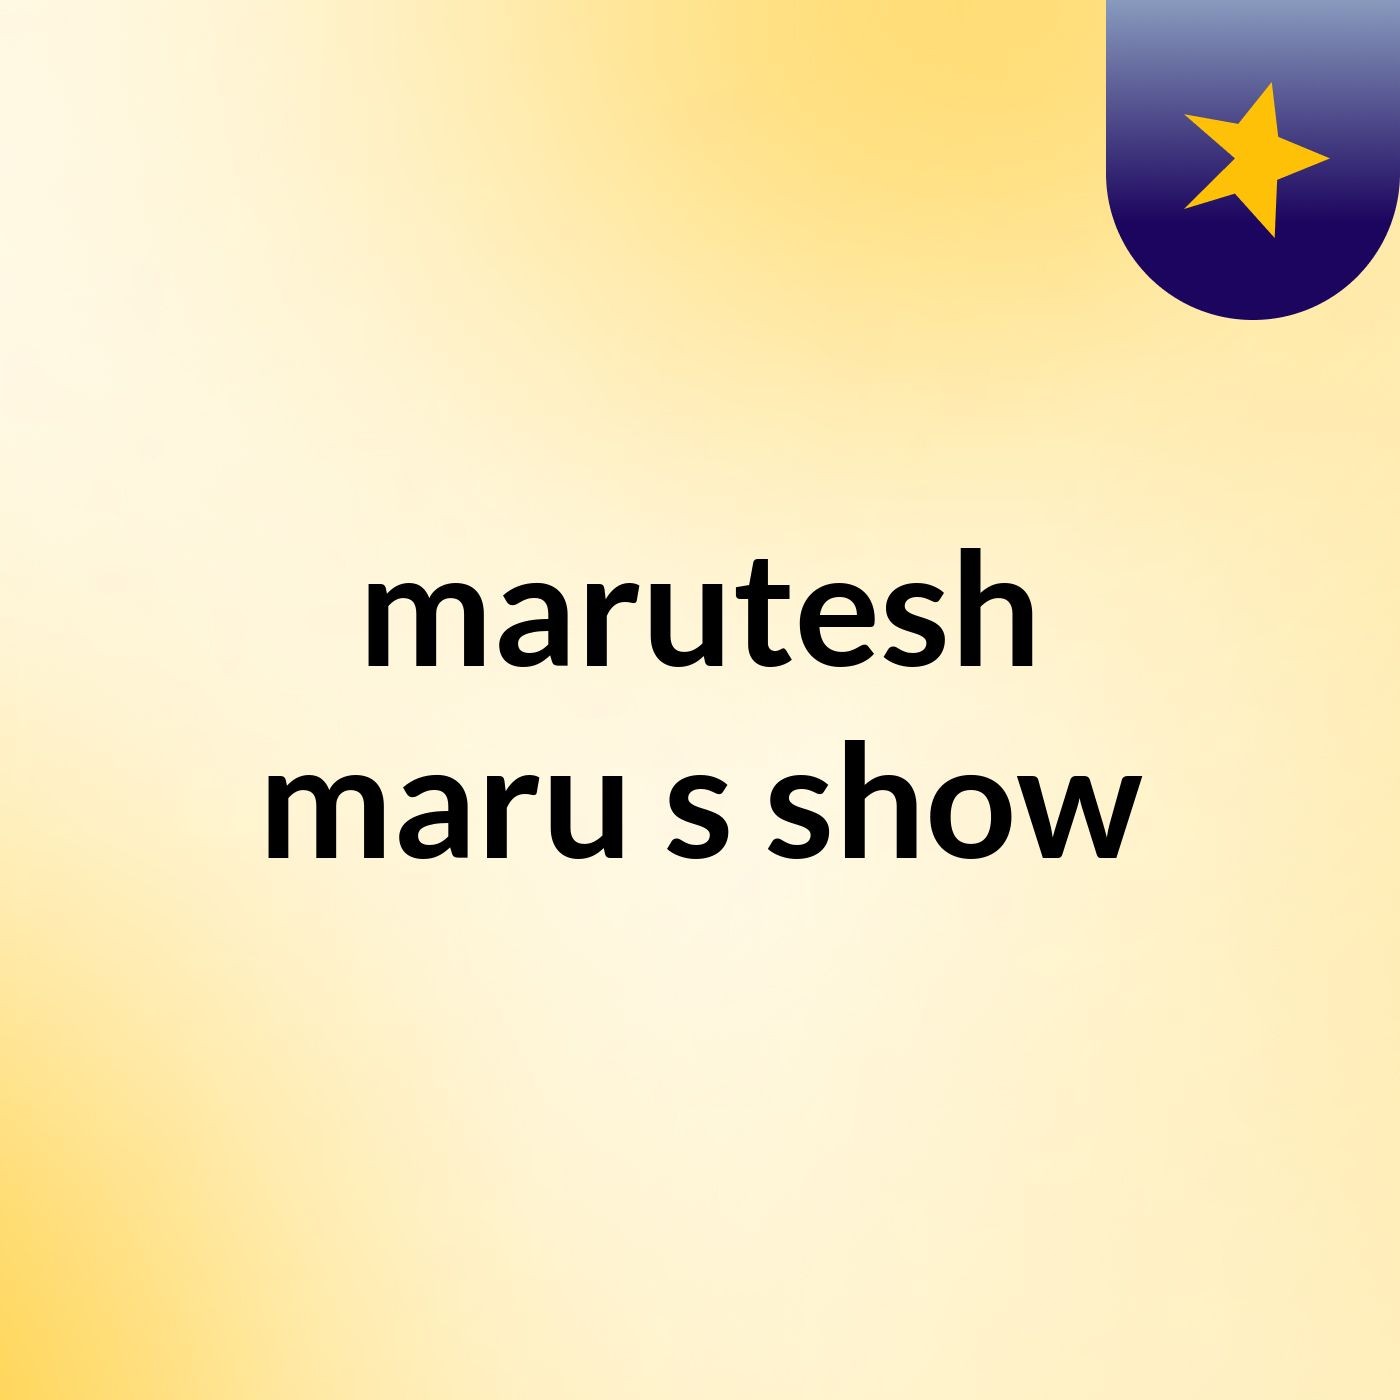 marutesh maru's show